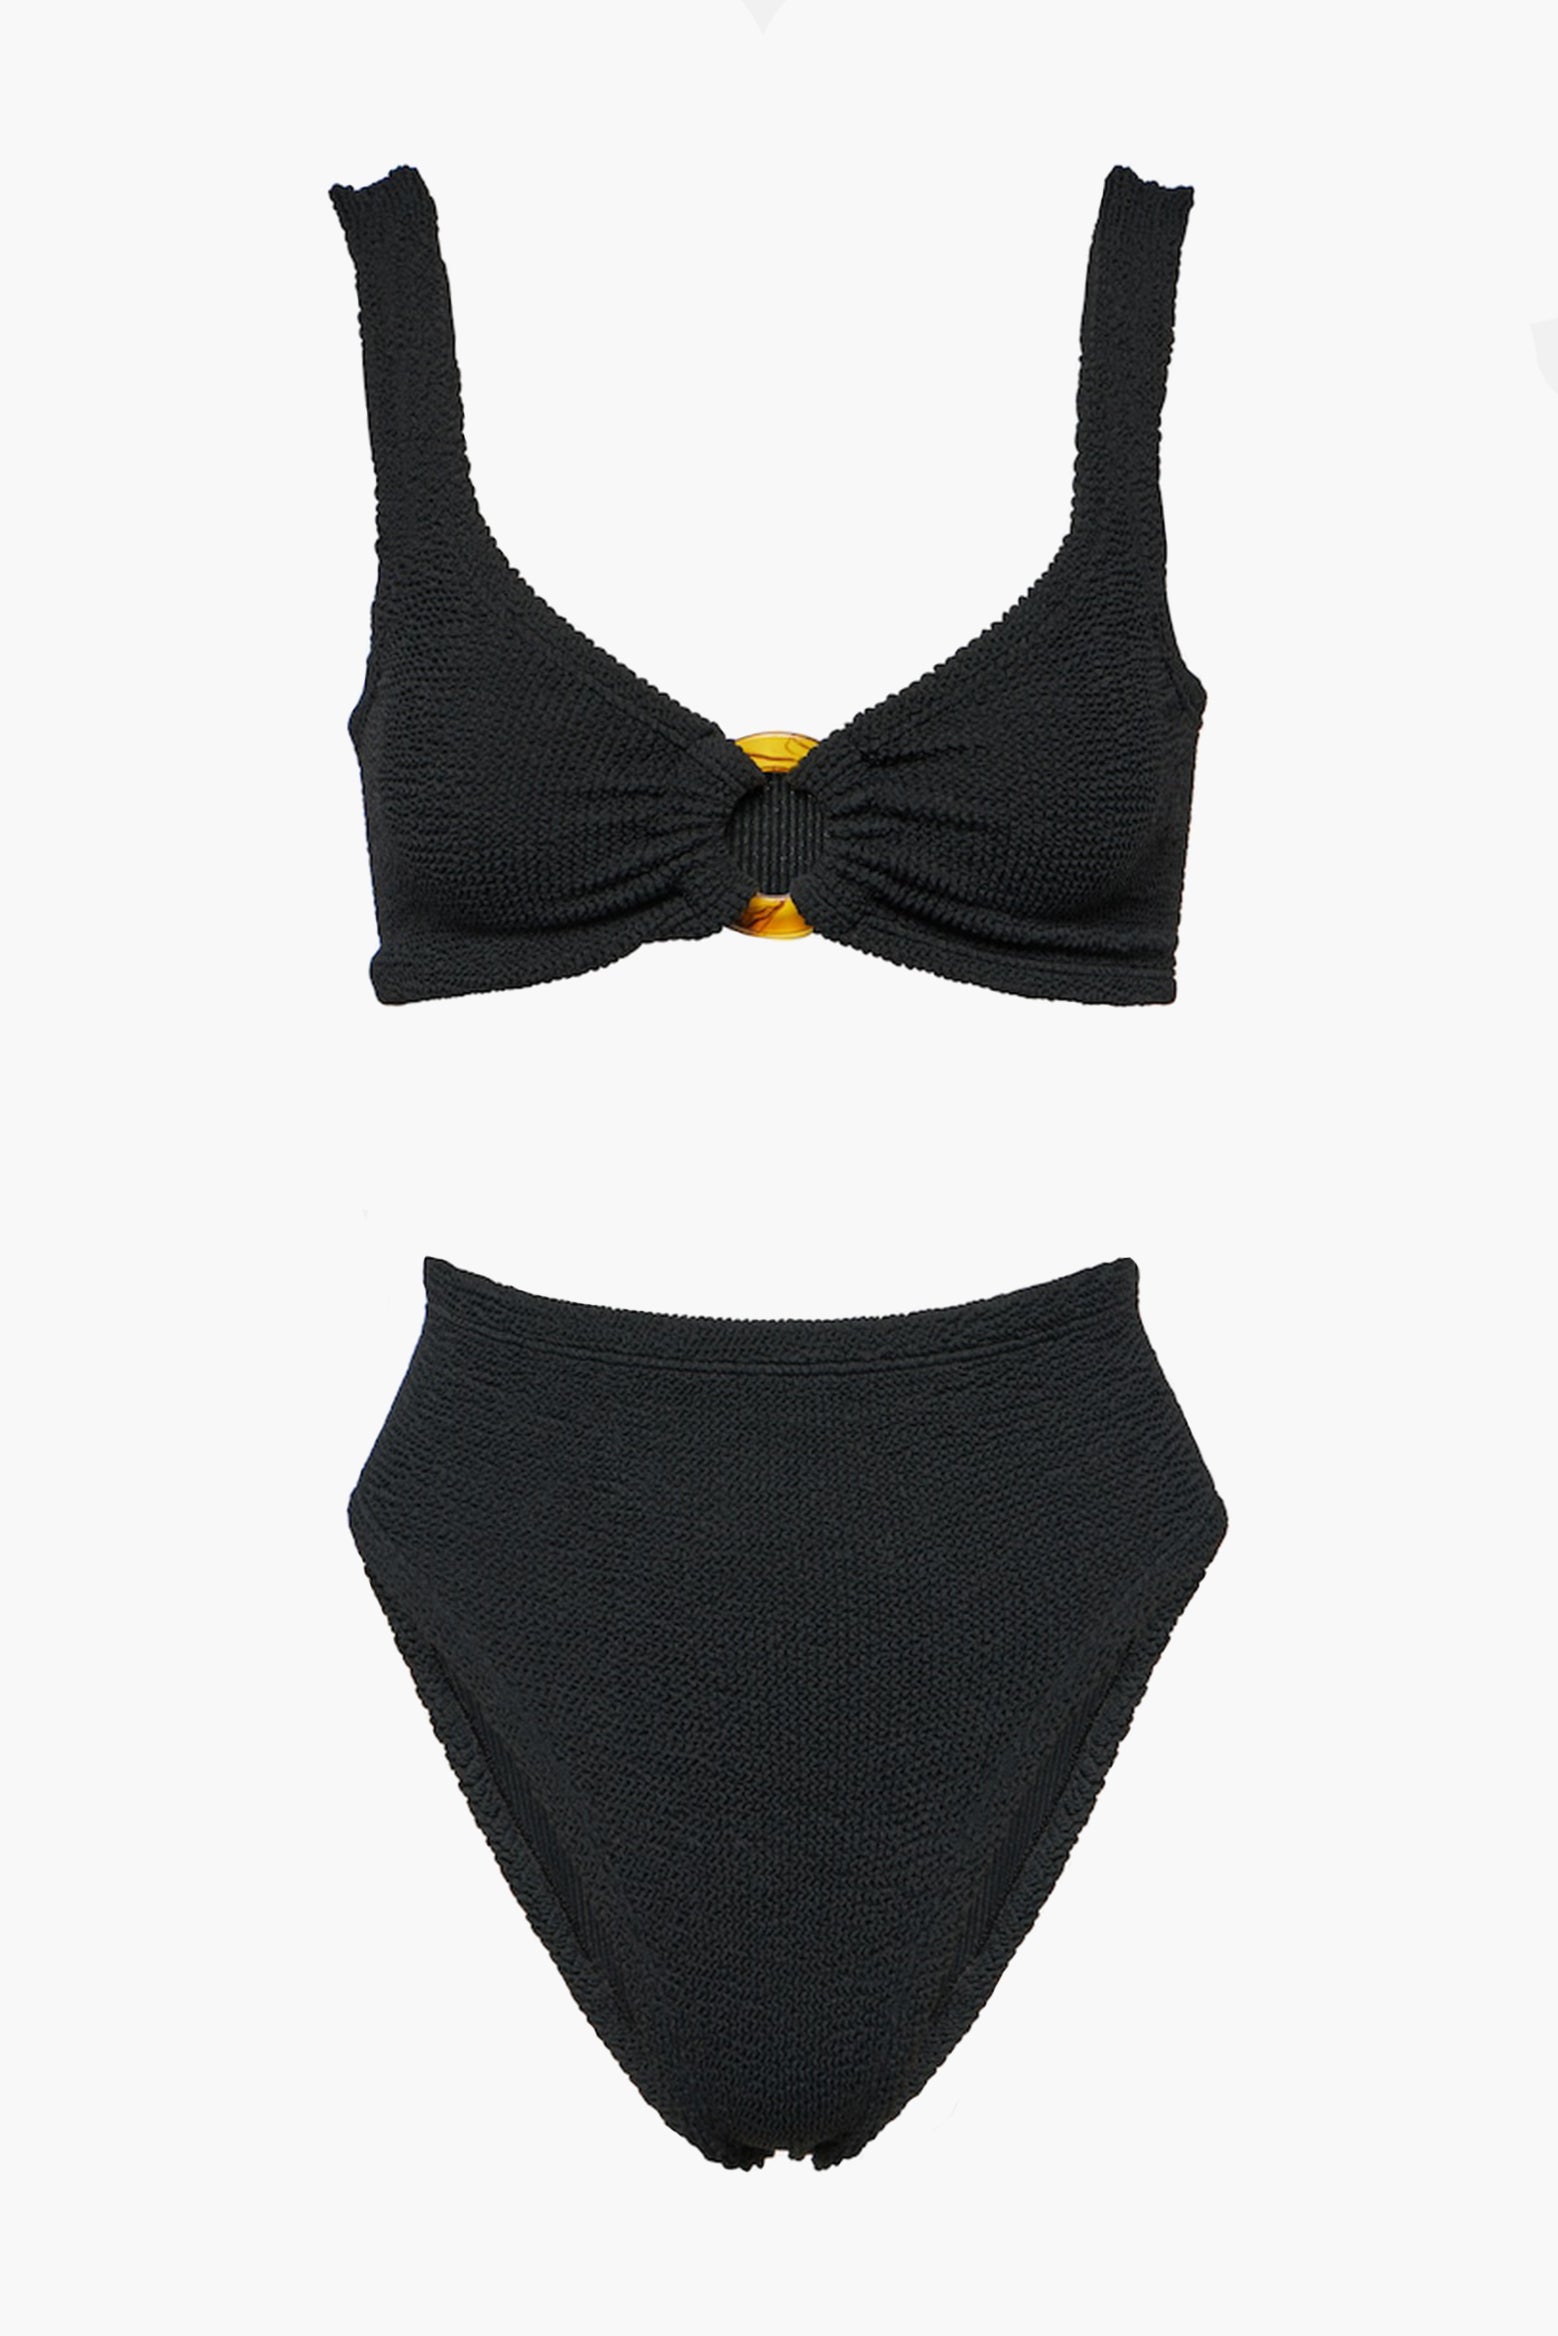 The Hunza G Nadine Bikini in Black available at The New Trend Australia